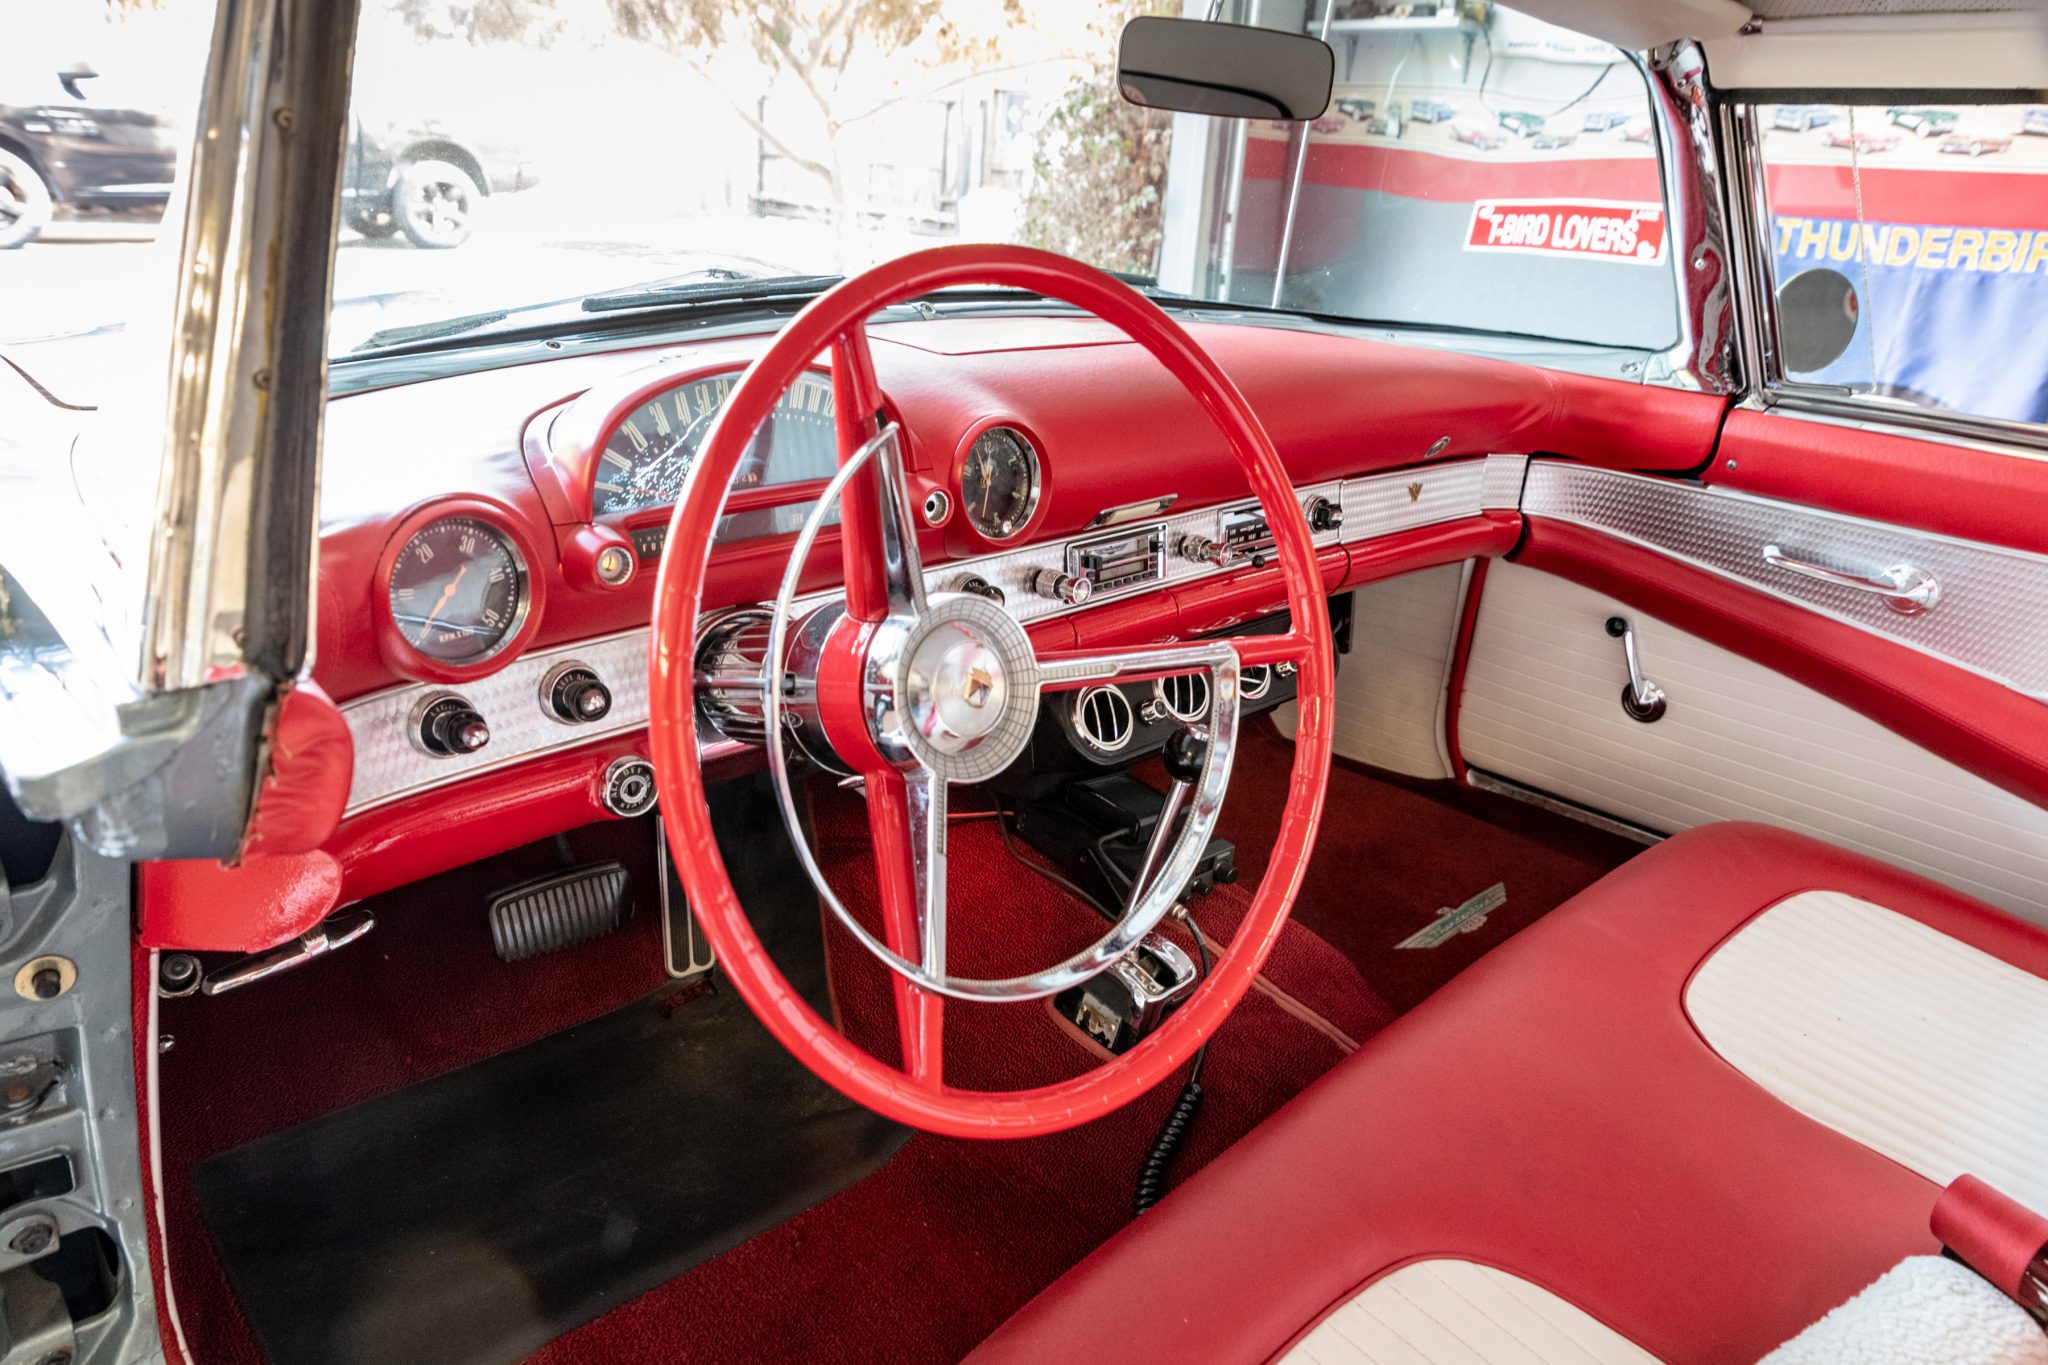 1956 Ford Thunderbird steering wheel